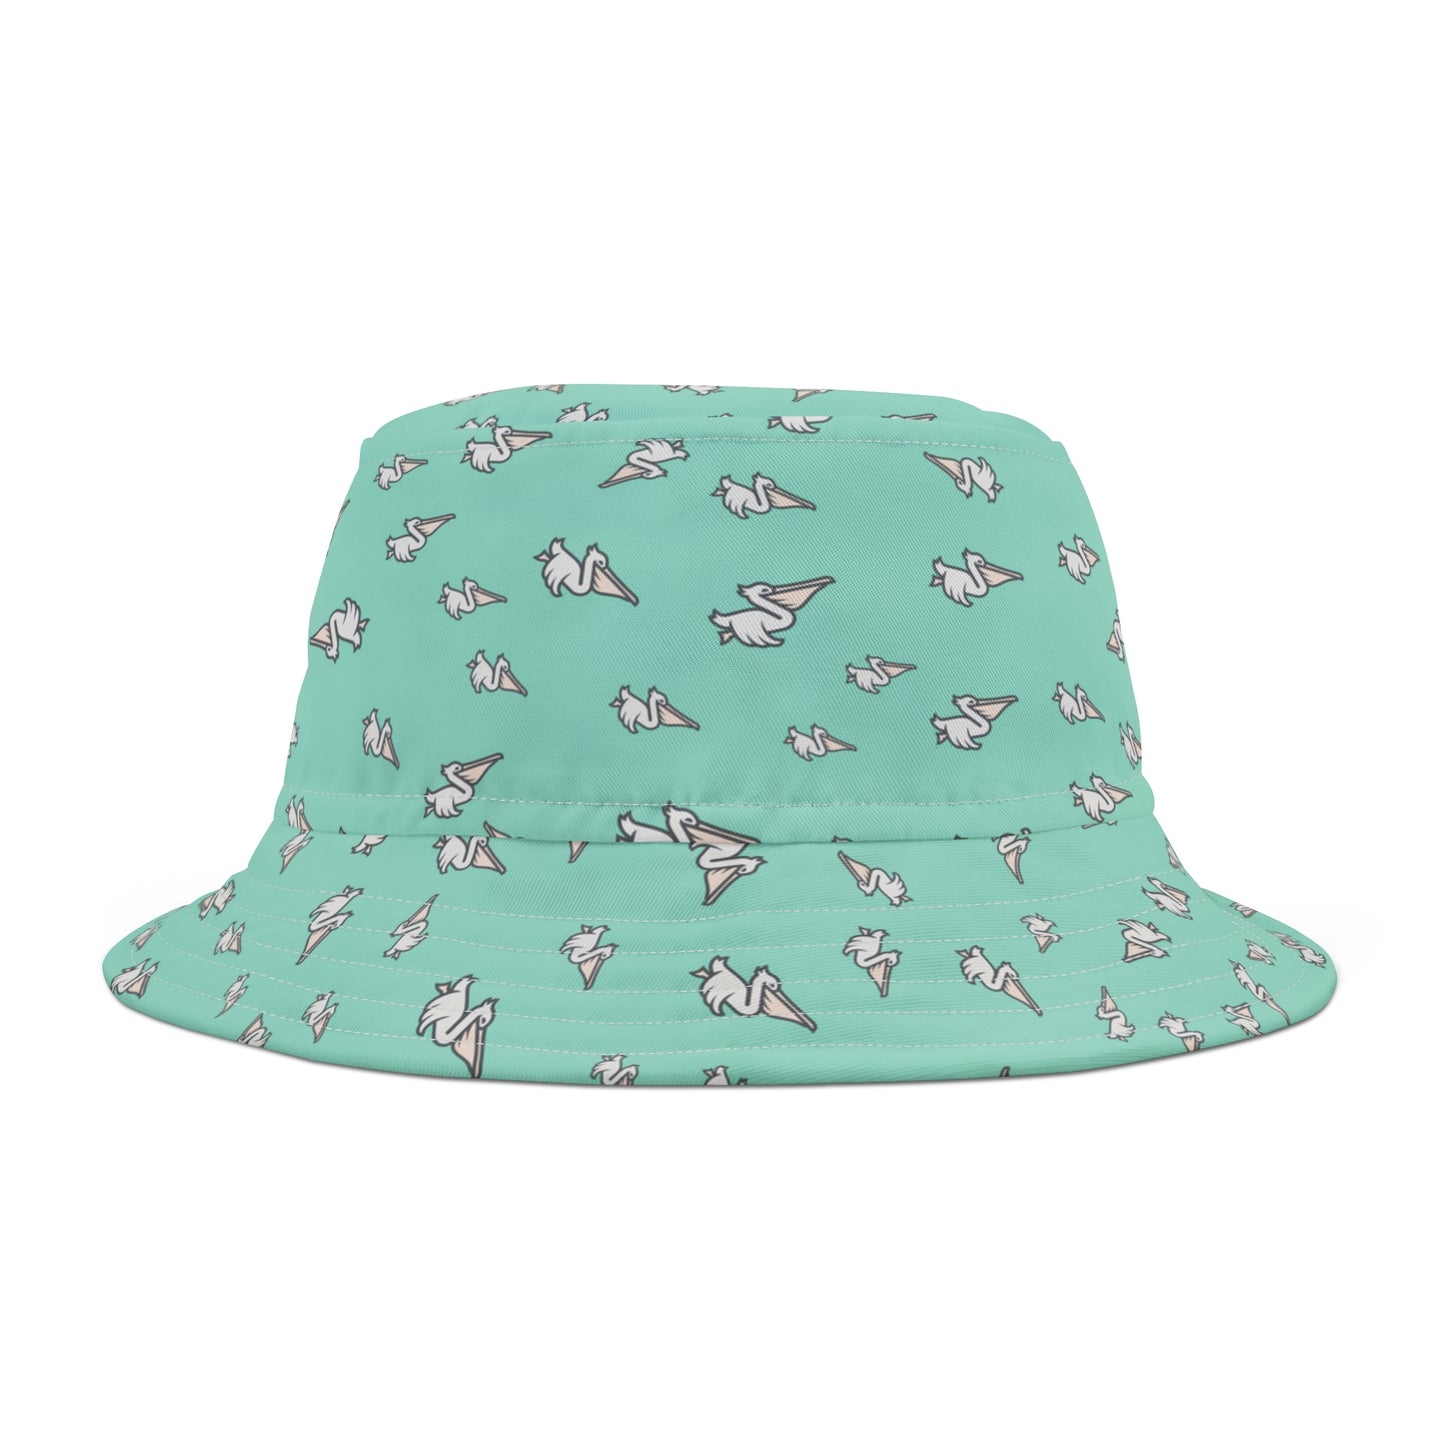 "Virgin Vibes - Swirly Birds" Bucket Hat